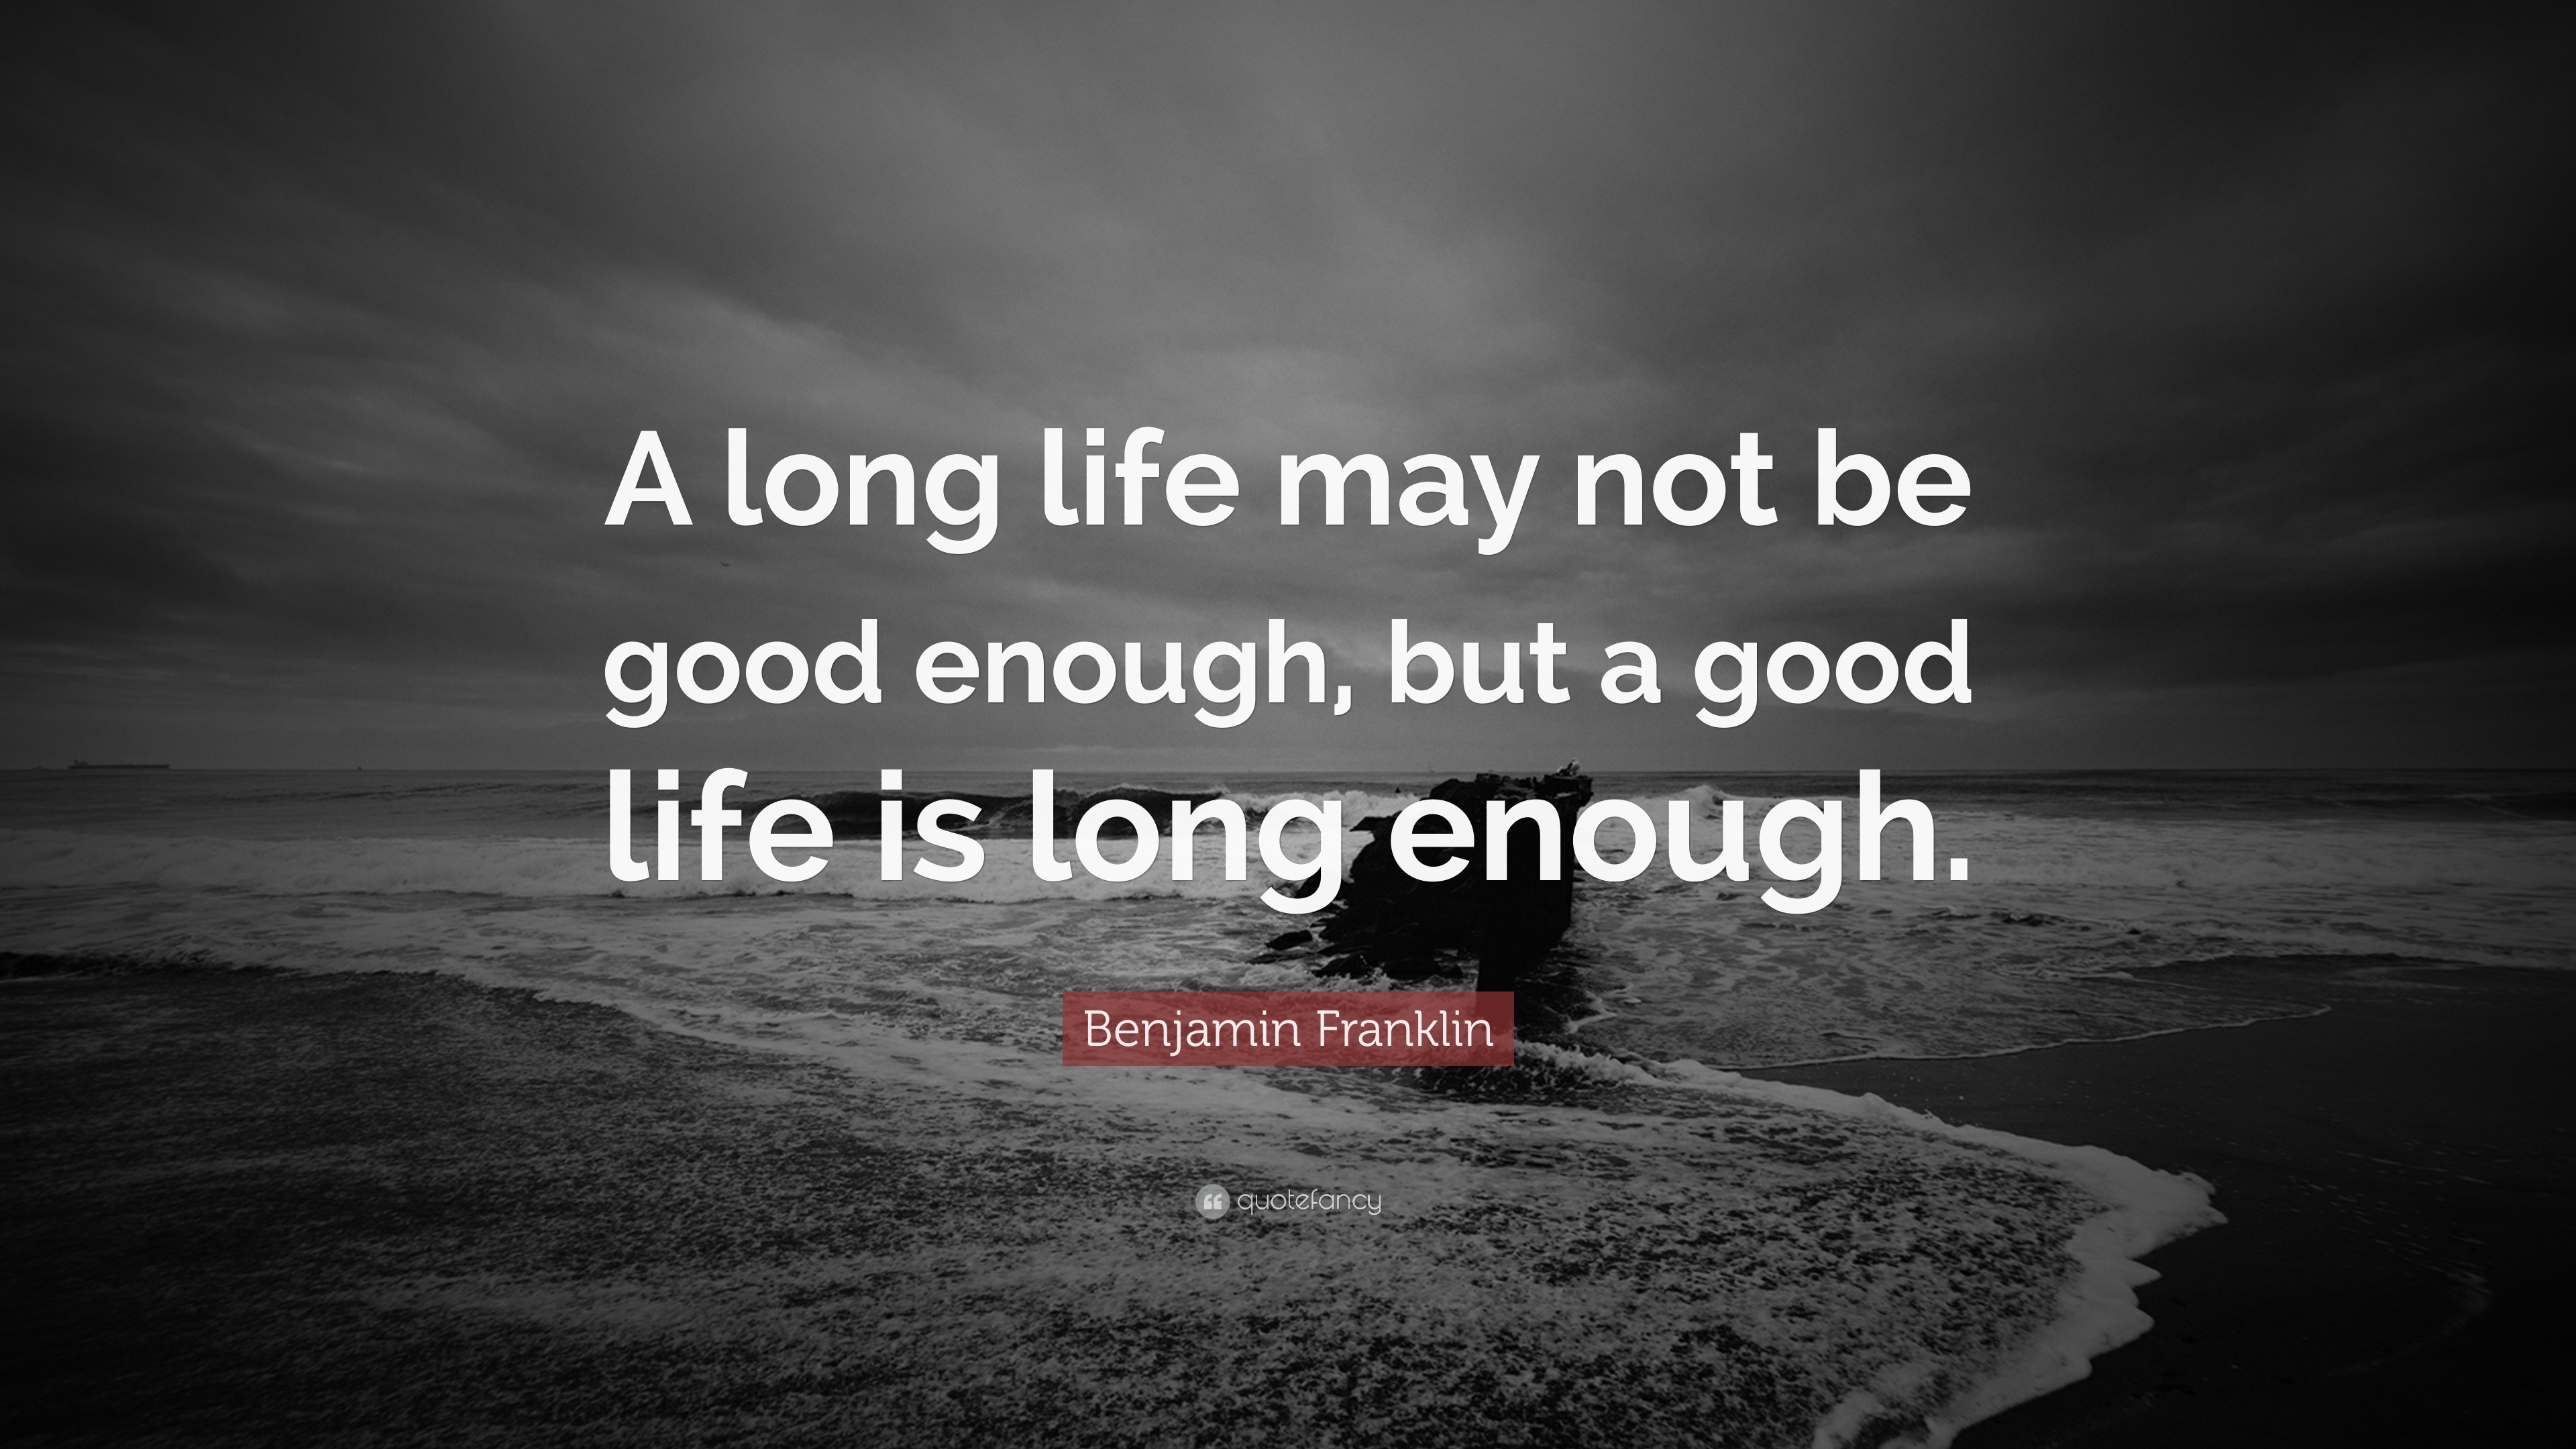 Benjamin Franklin Quote “A long life may not be good